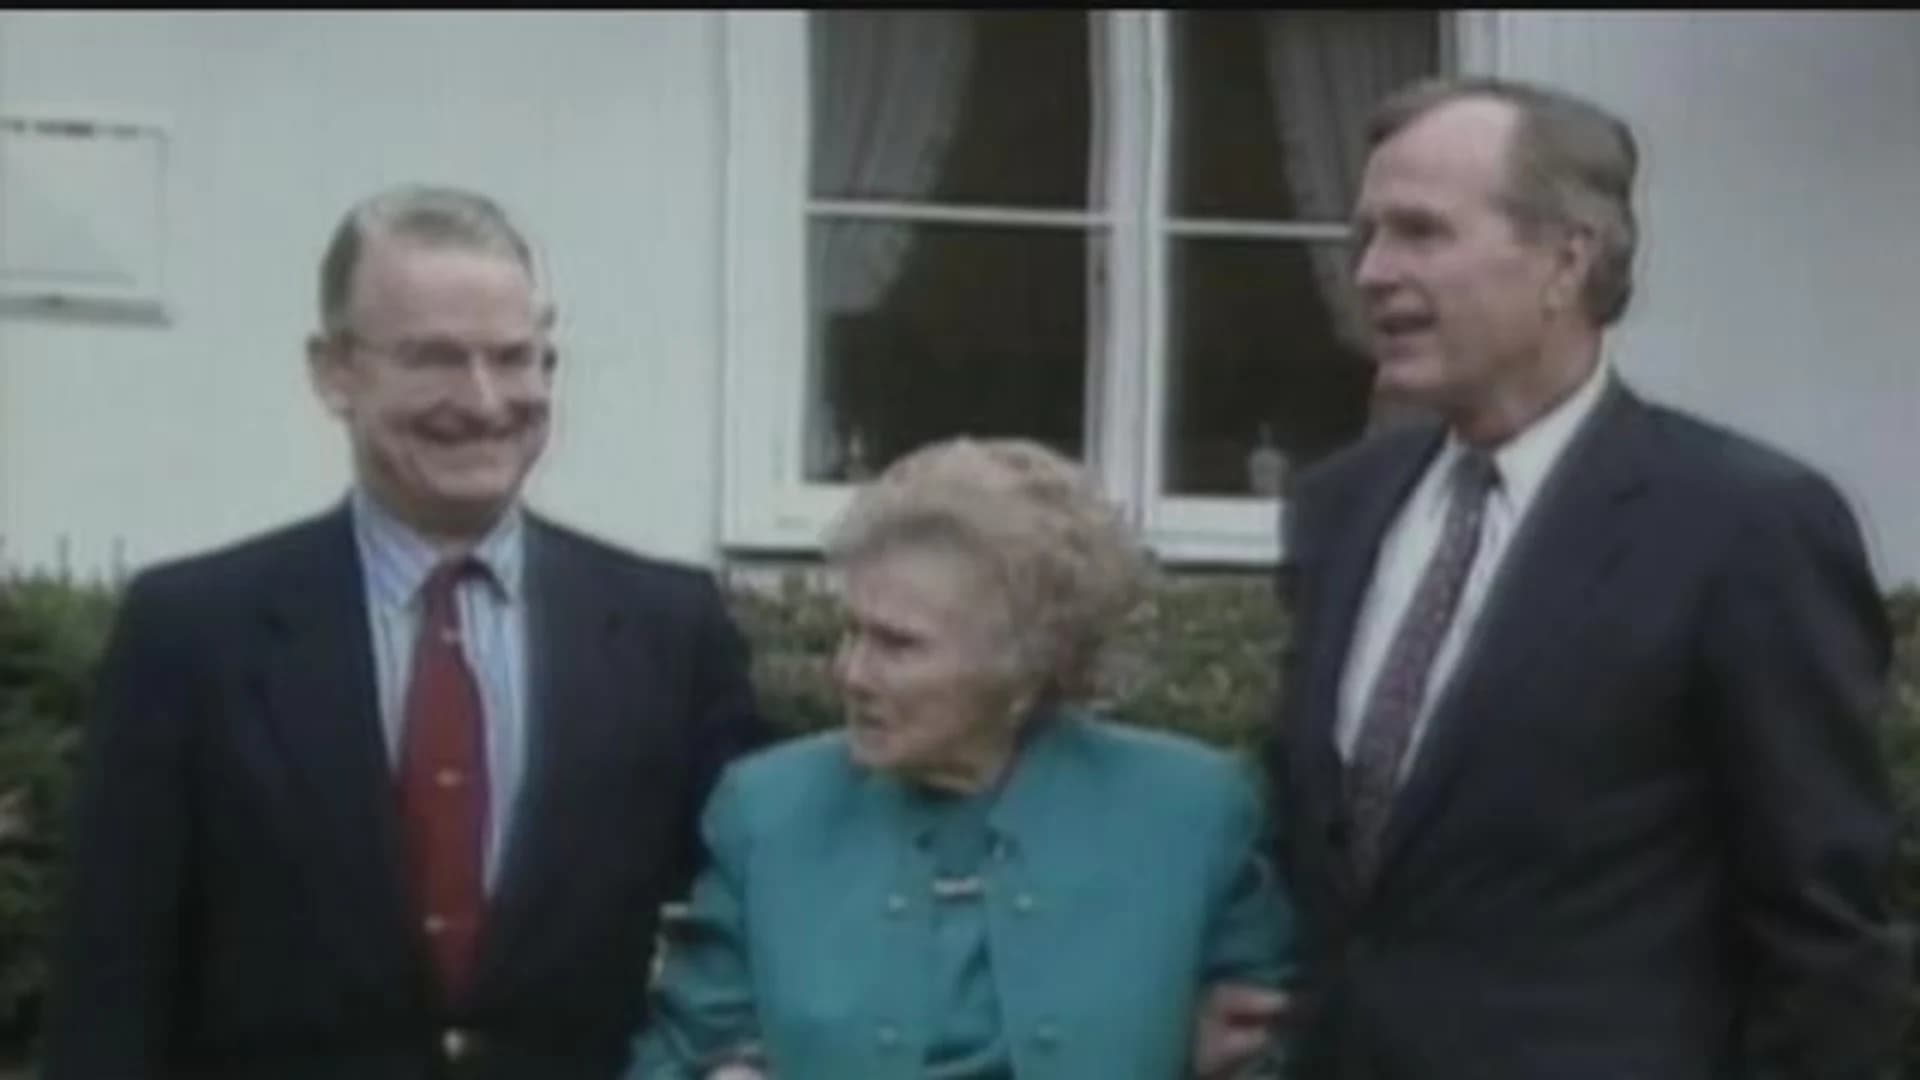 Greenwich pastor: President George H.W. Bush was ‘warm, friendly’